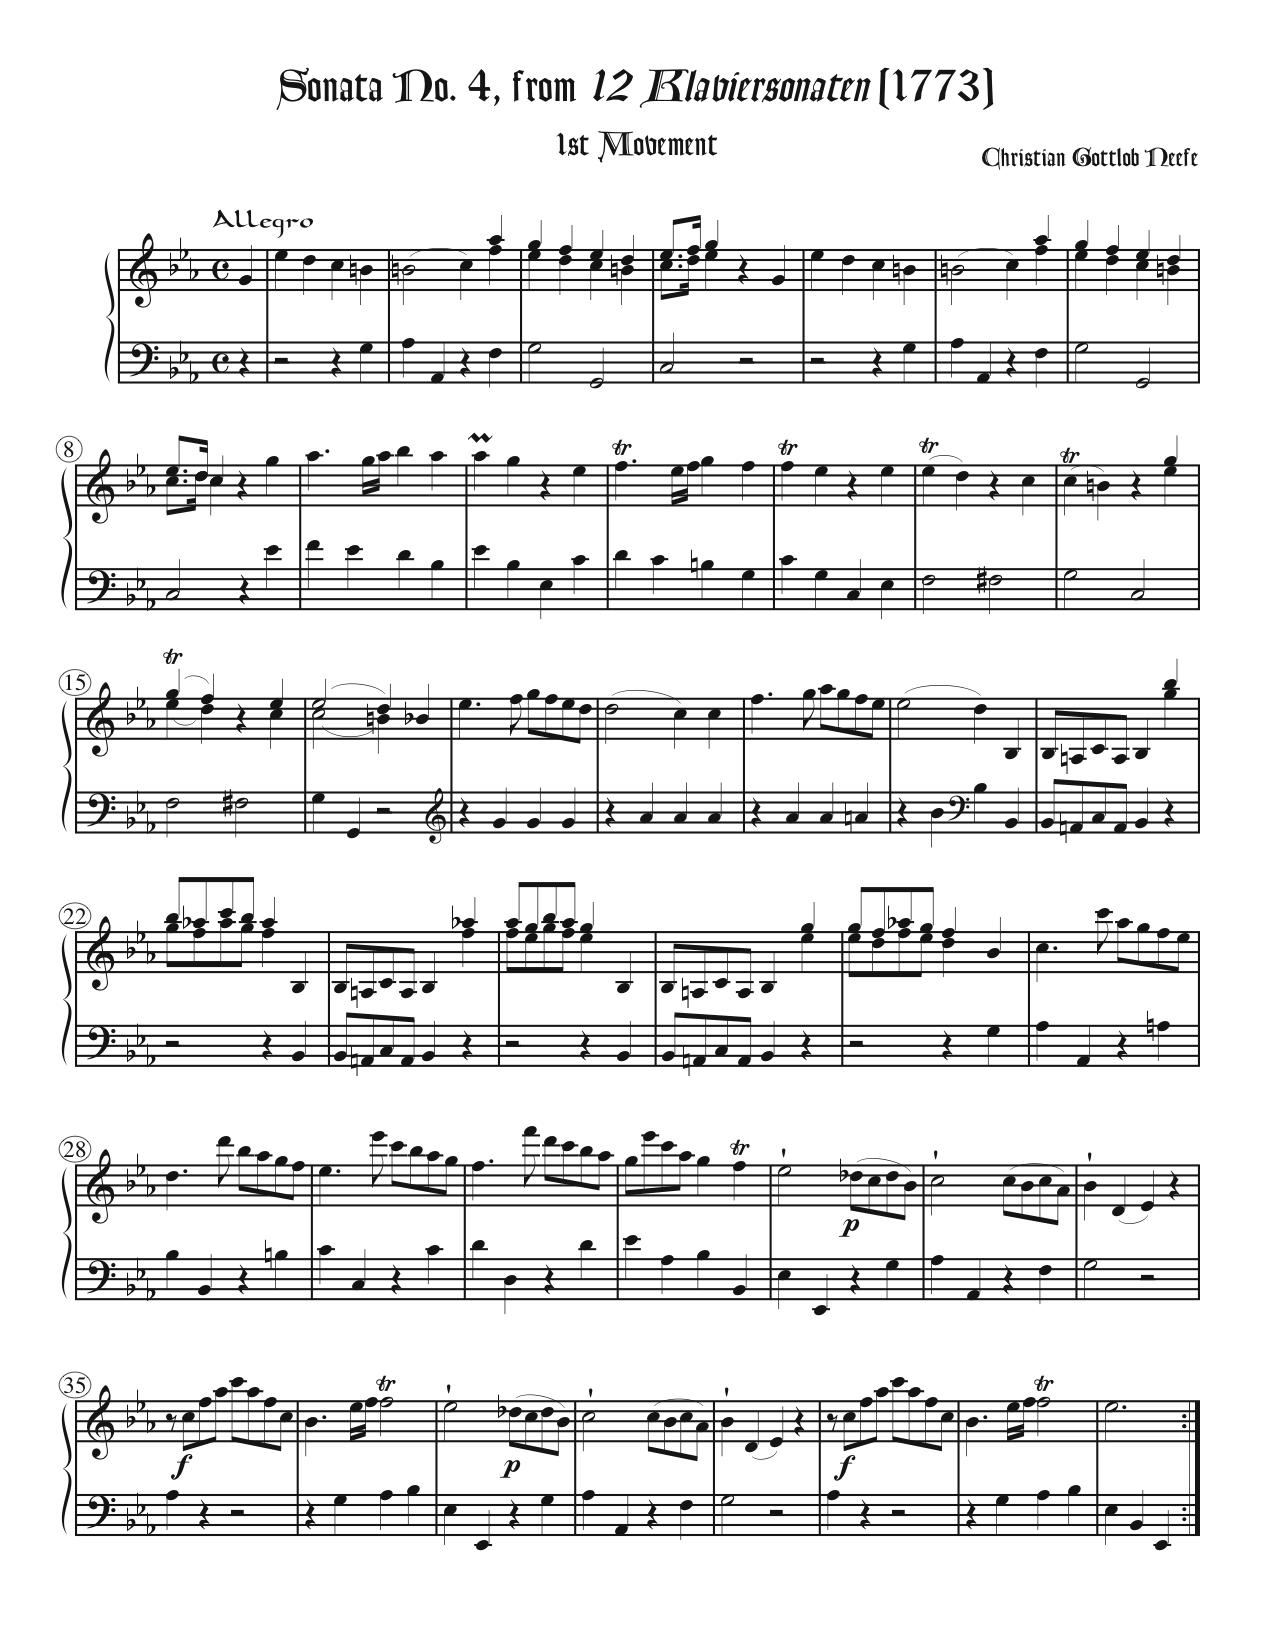 No. 4 from *12 Sonaten* (1773)